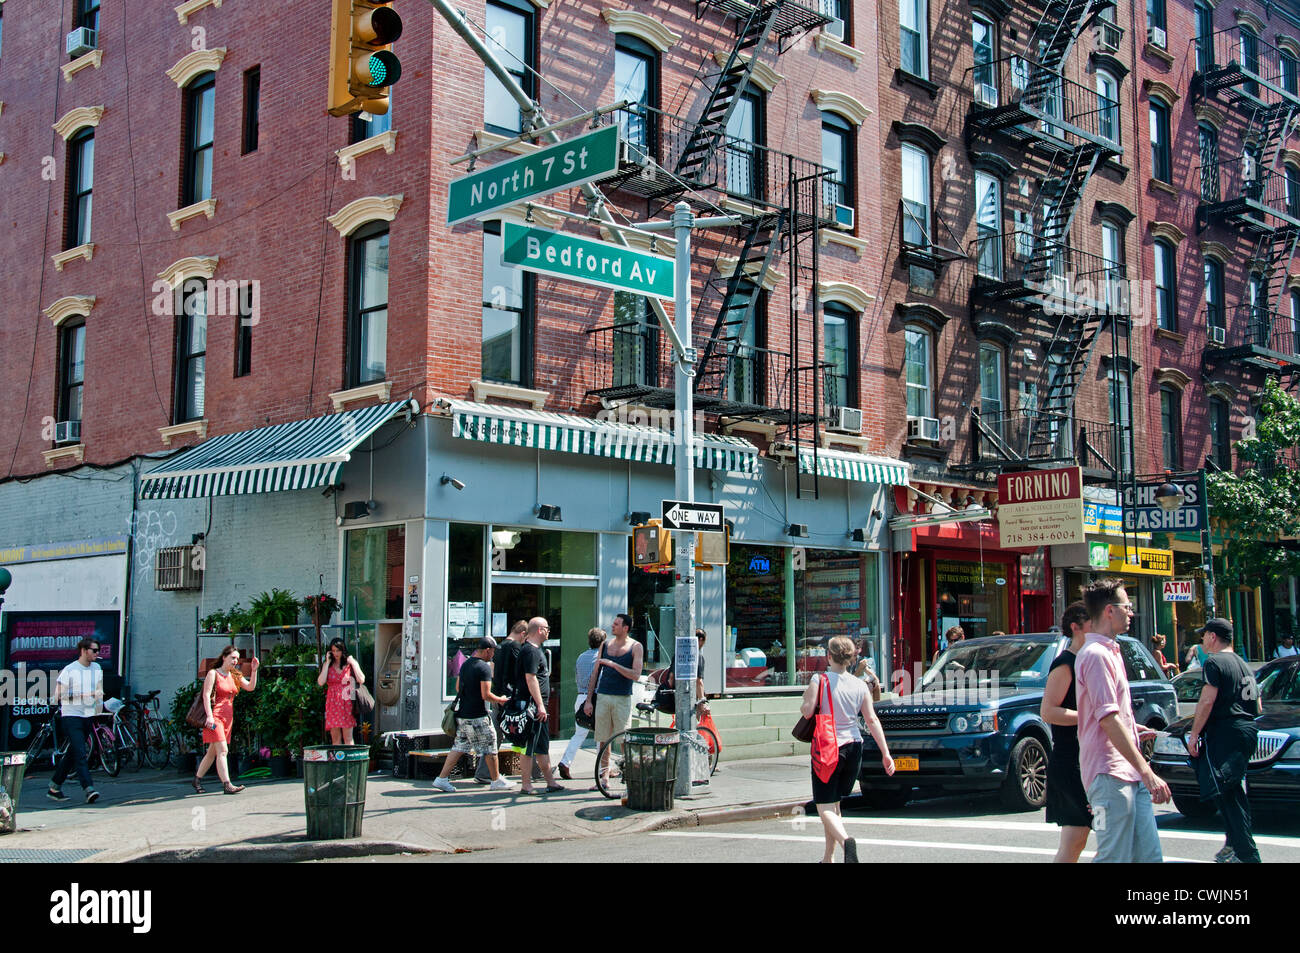 Bedford Avenue Williamsburg Brooklyn New York United States of America Stock Photo